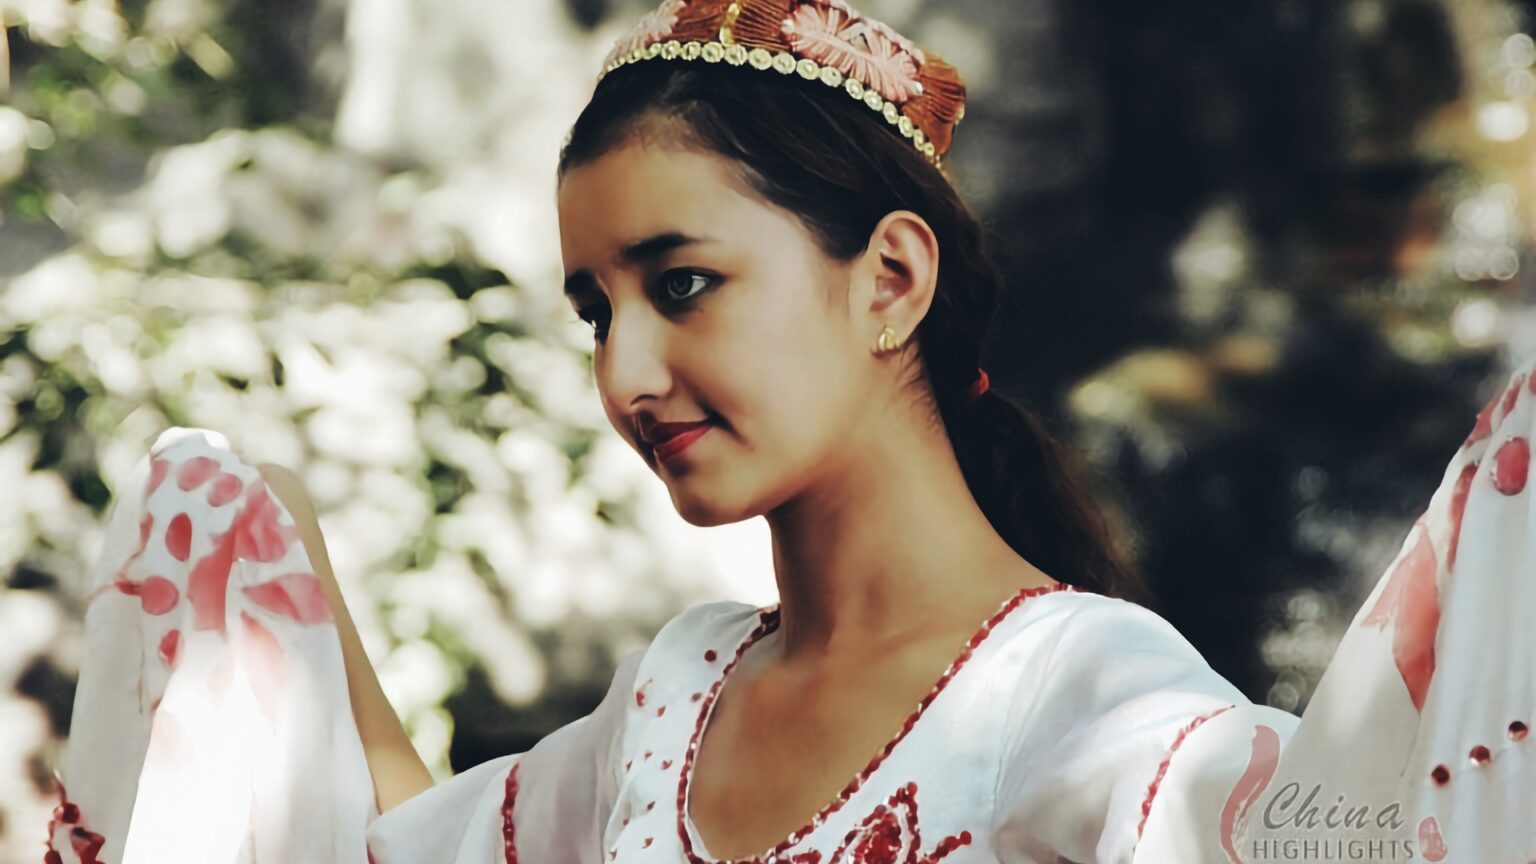 Traditional Uyghur woman